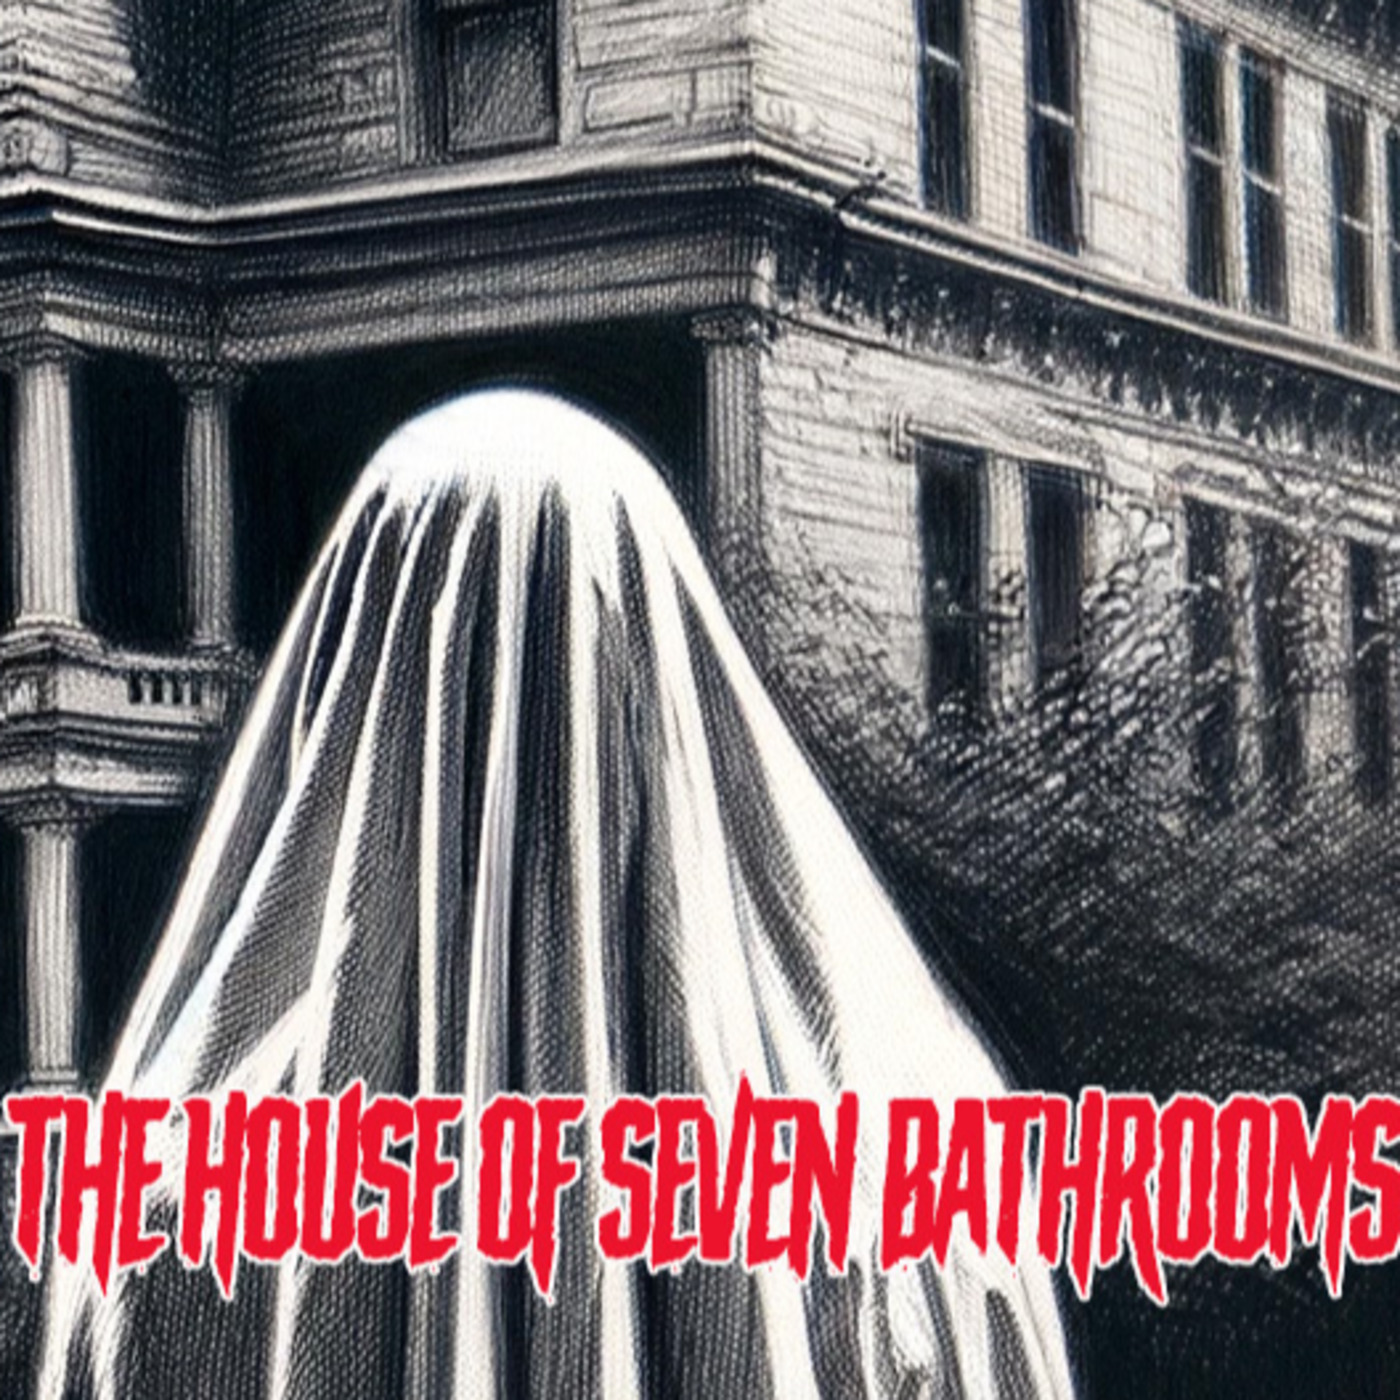 Episode 114: The House of Seven Bathrooms